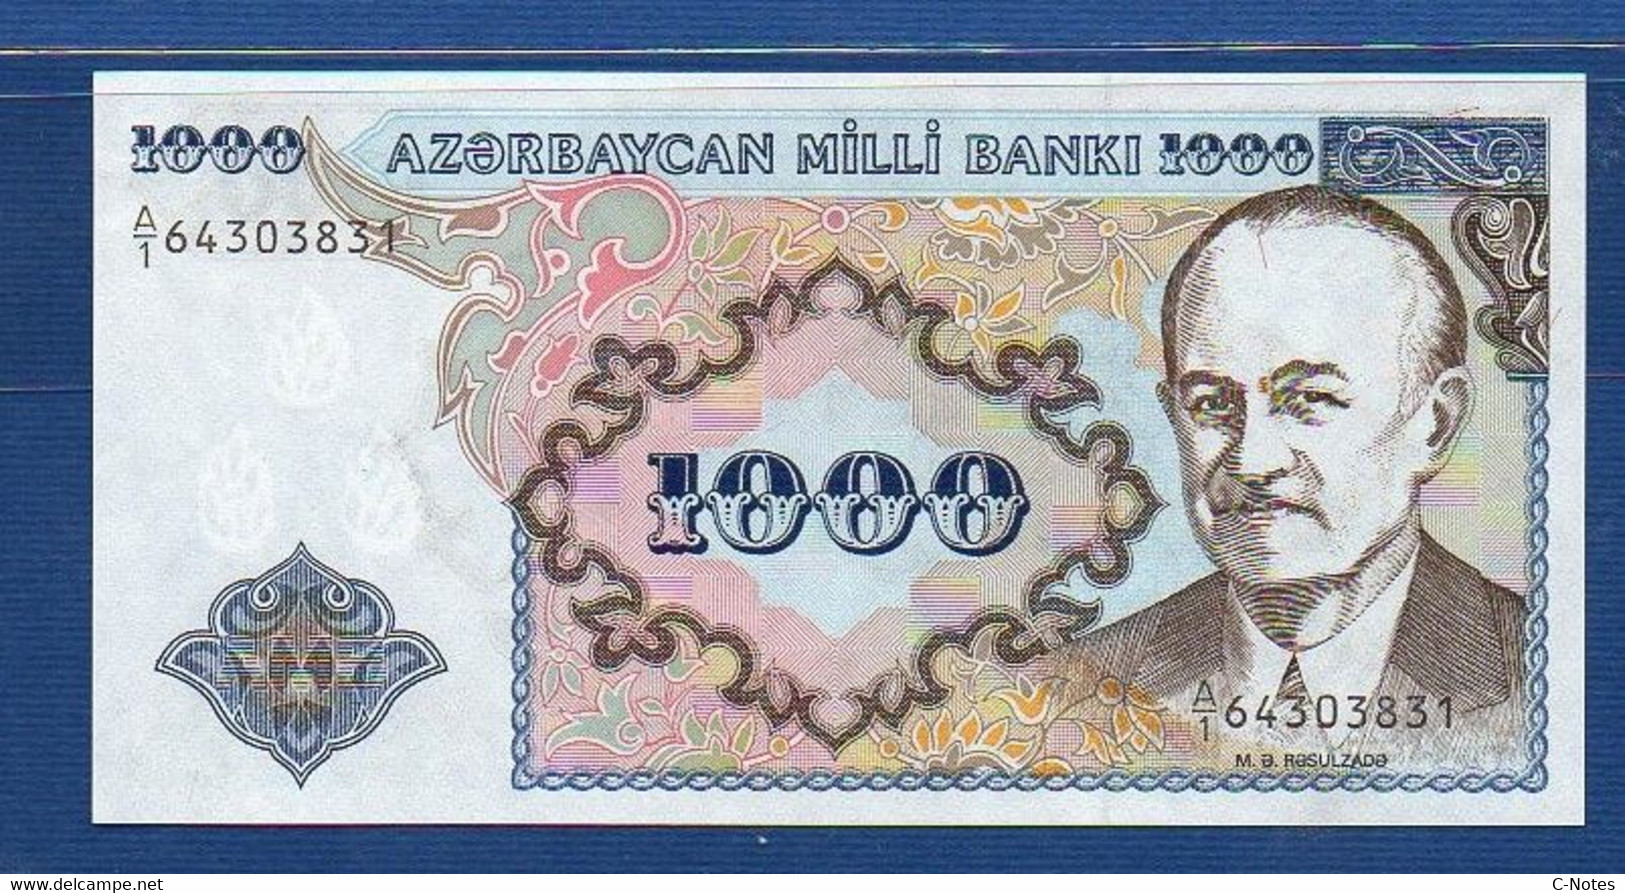 AZERBAIJAN - P.20a - 1000 1.000 MANAT ND (1993) UNC, Serie A/1 64303831 - Azerbaïjan